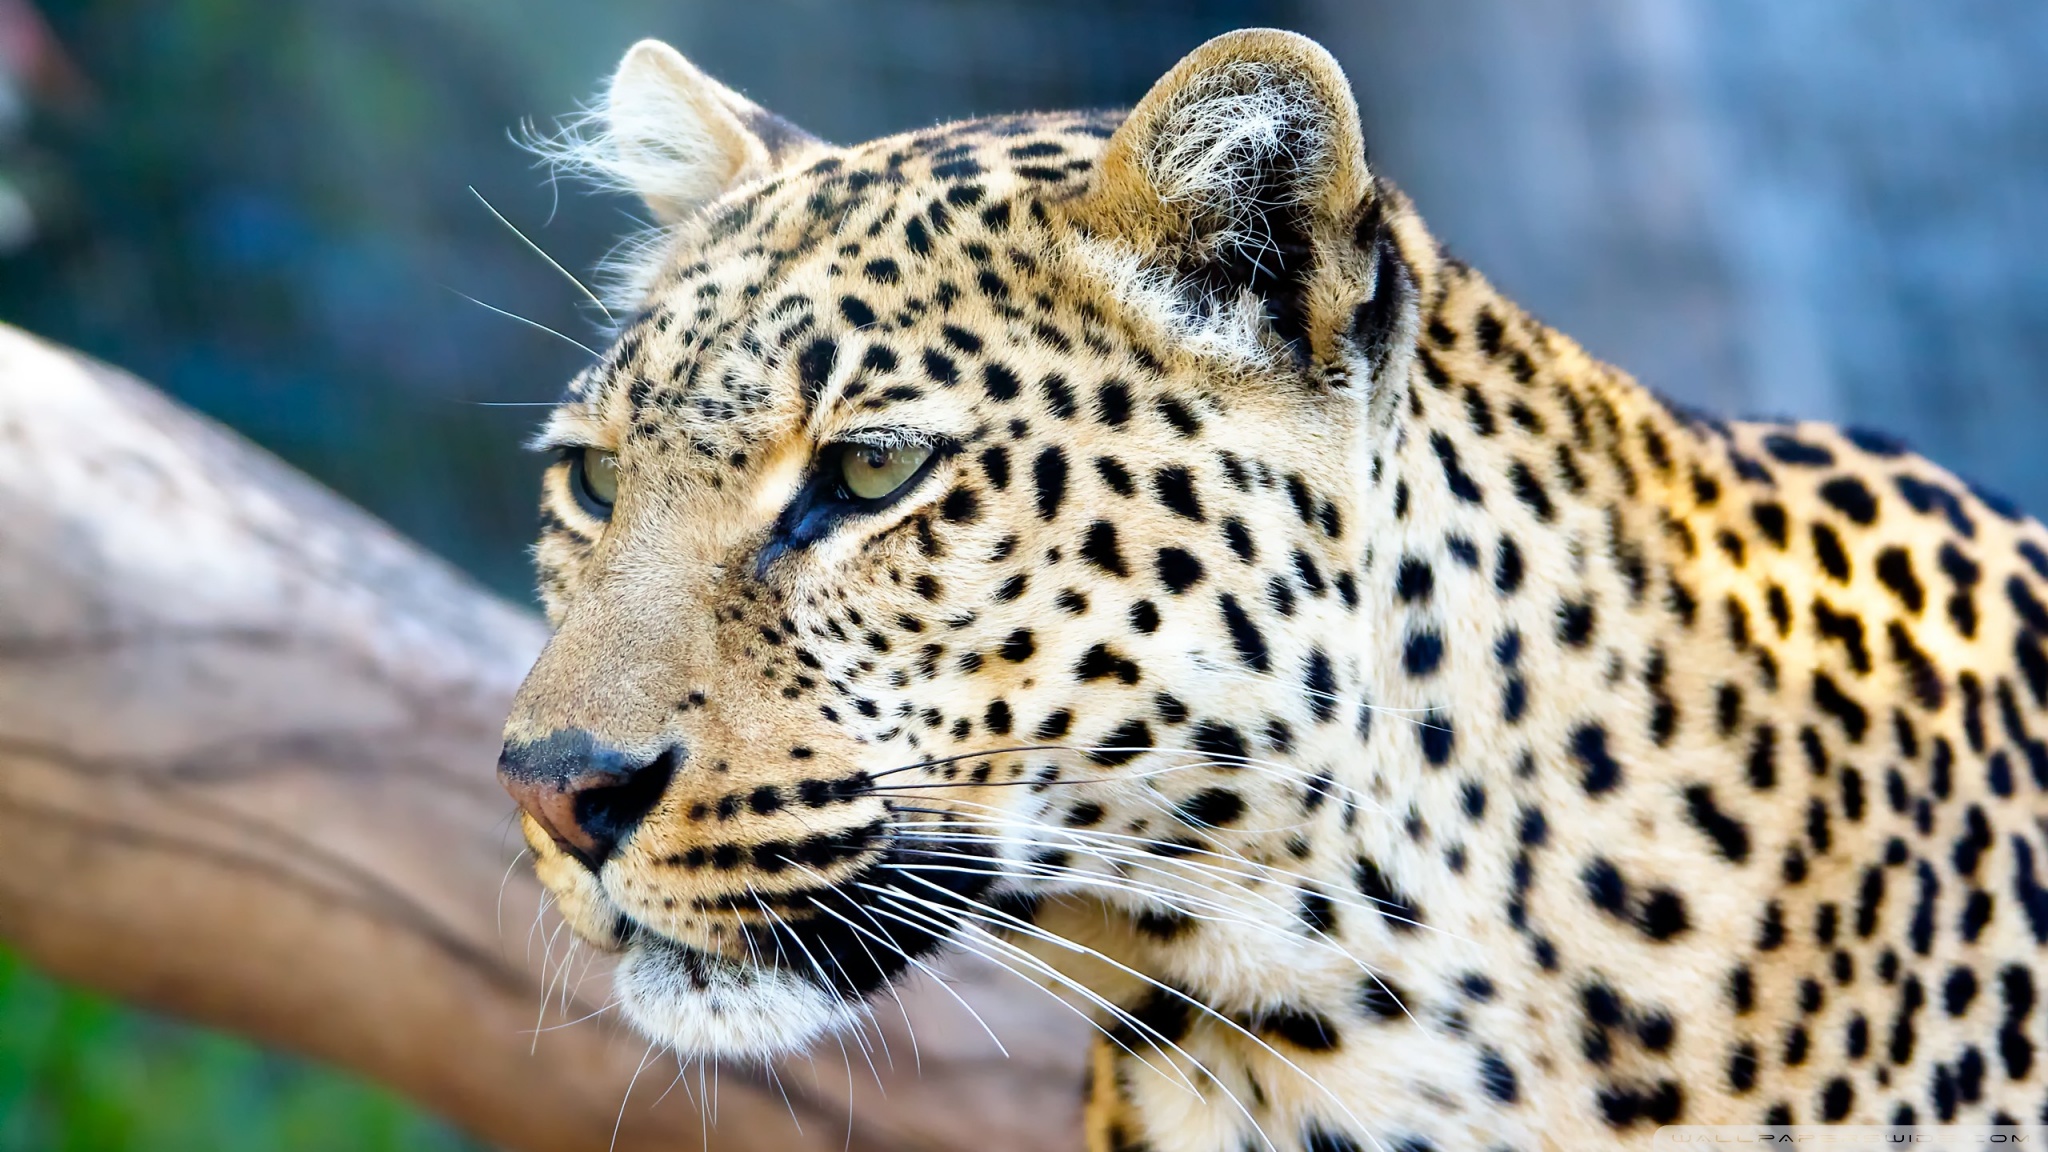 Hd Images Of Leopard - HD Wallpaper 